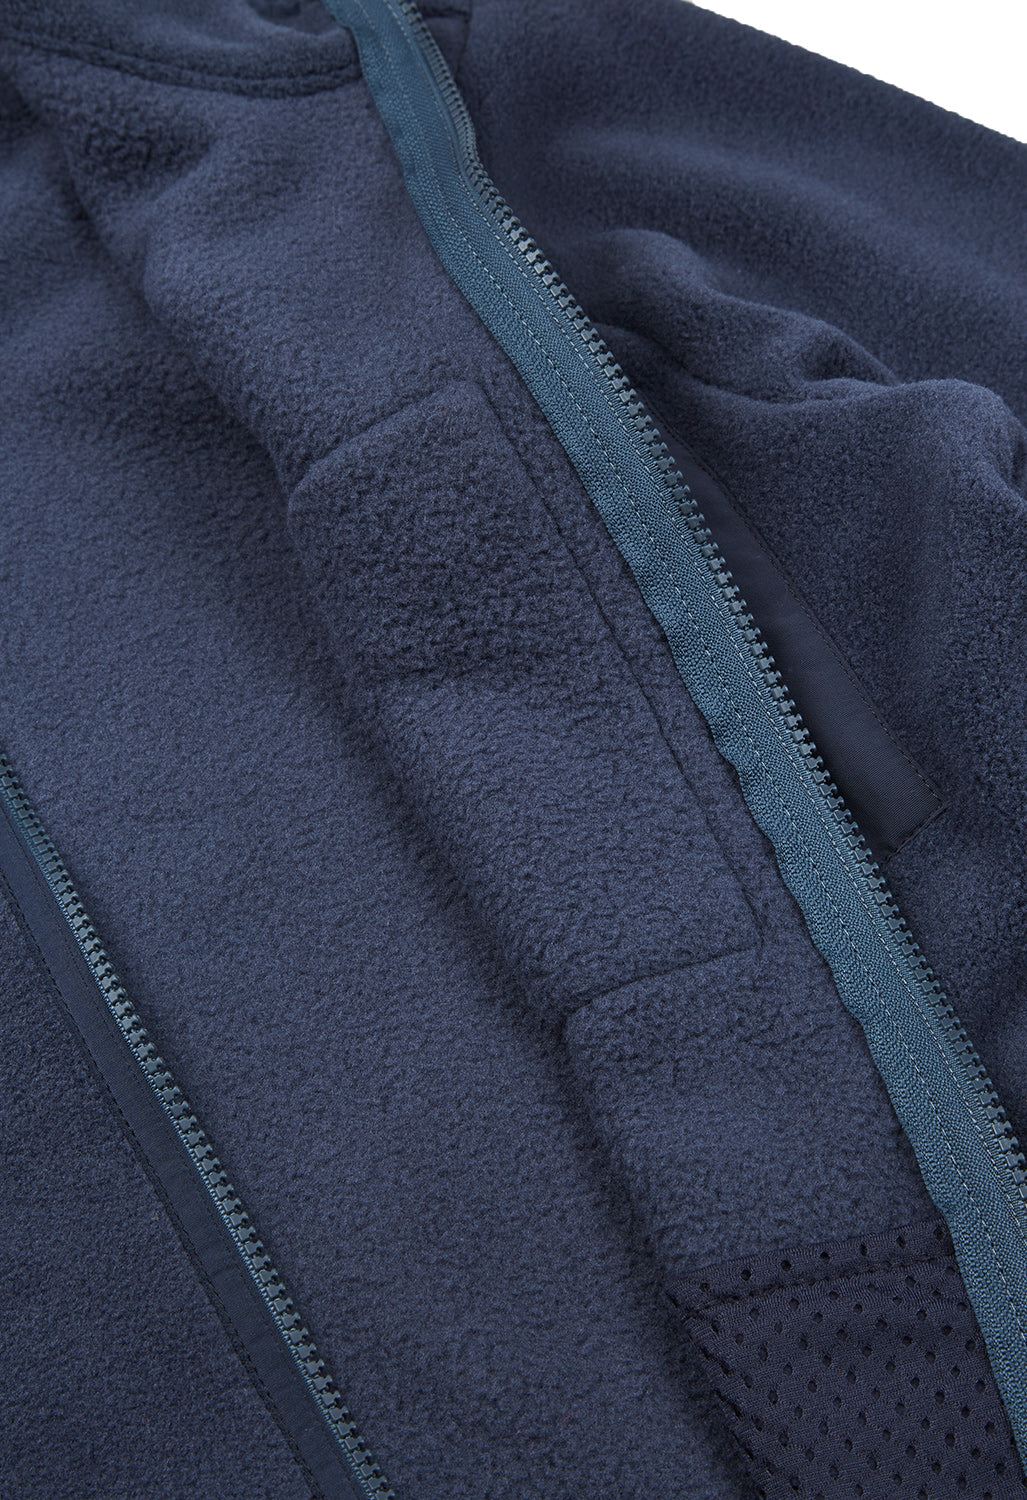 Patagonia Men's Synchilla Jacket - Smolder Blue